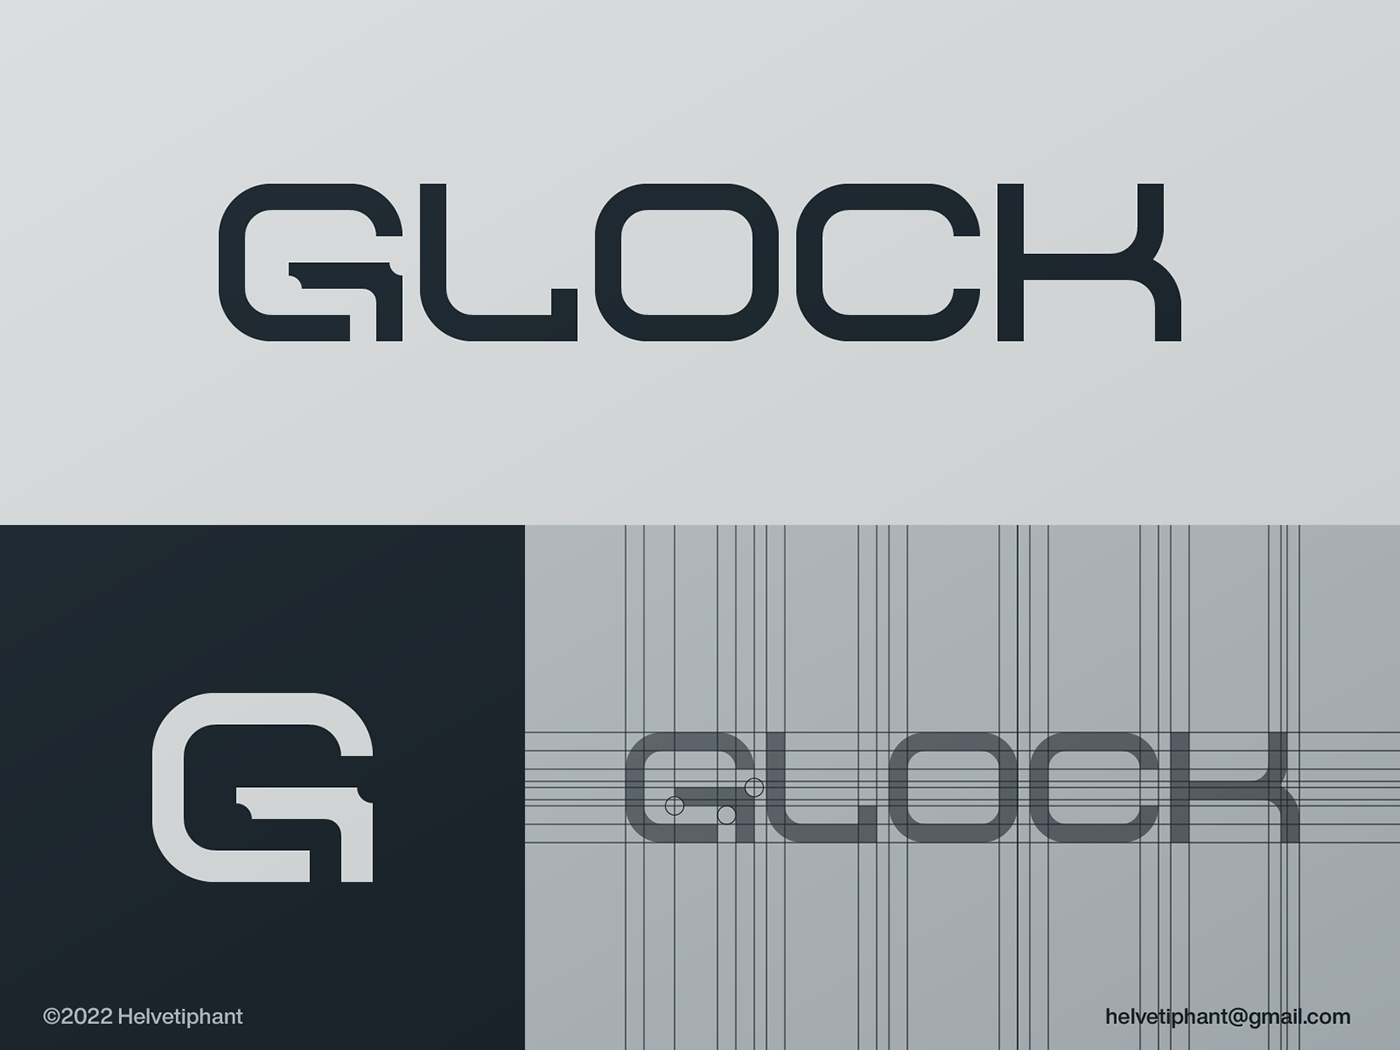 Glock logo redesign concept